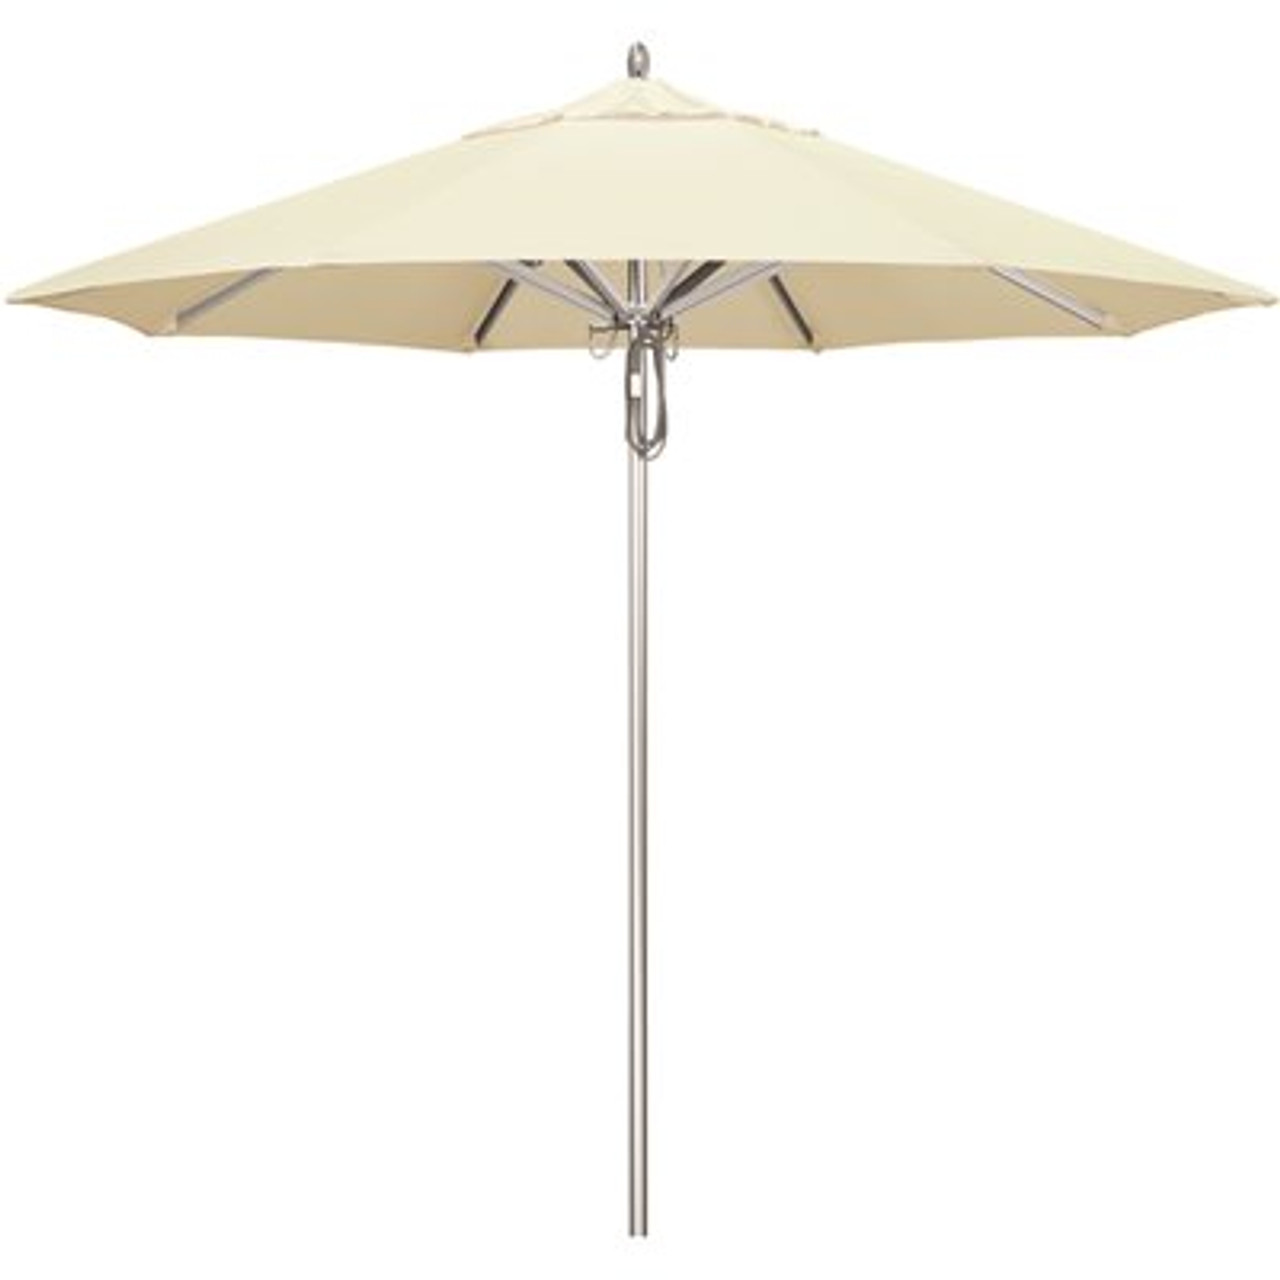 California Umbrella 9 ft. Silver Aluminum Commercial Market Patio Umbrella with Pulley Lift in Canvas Sunbrella